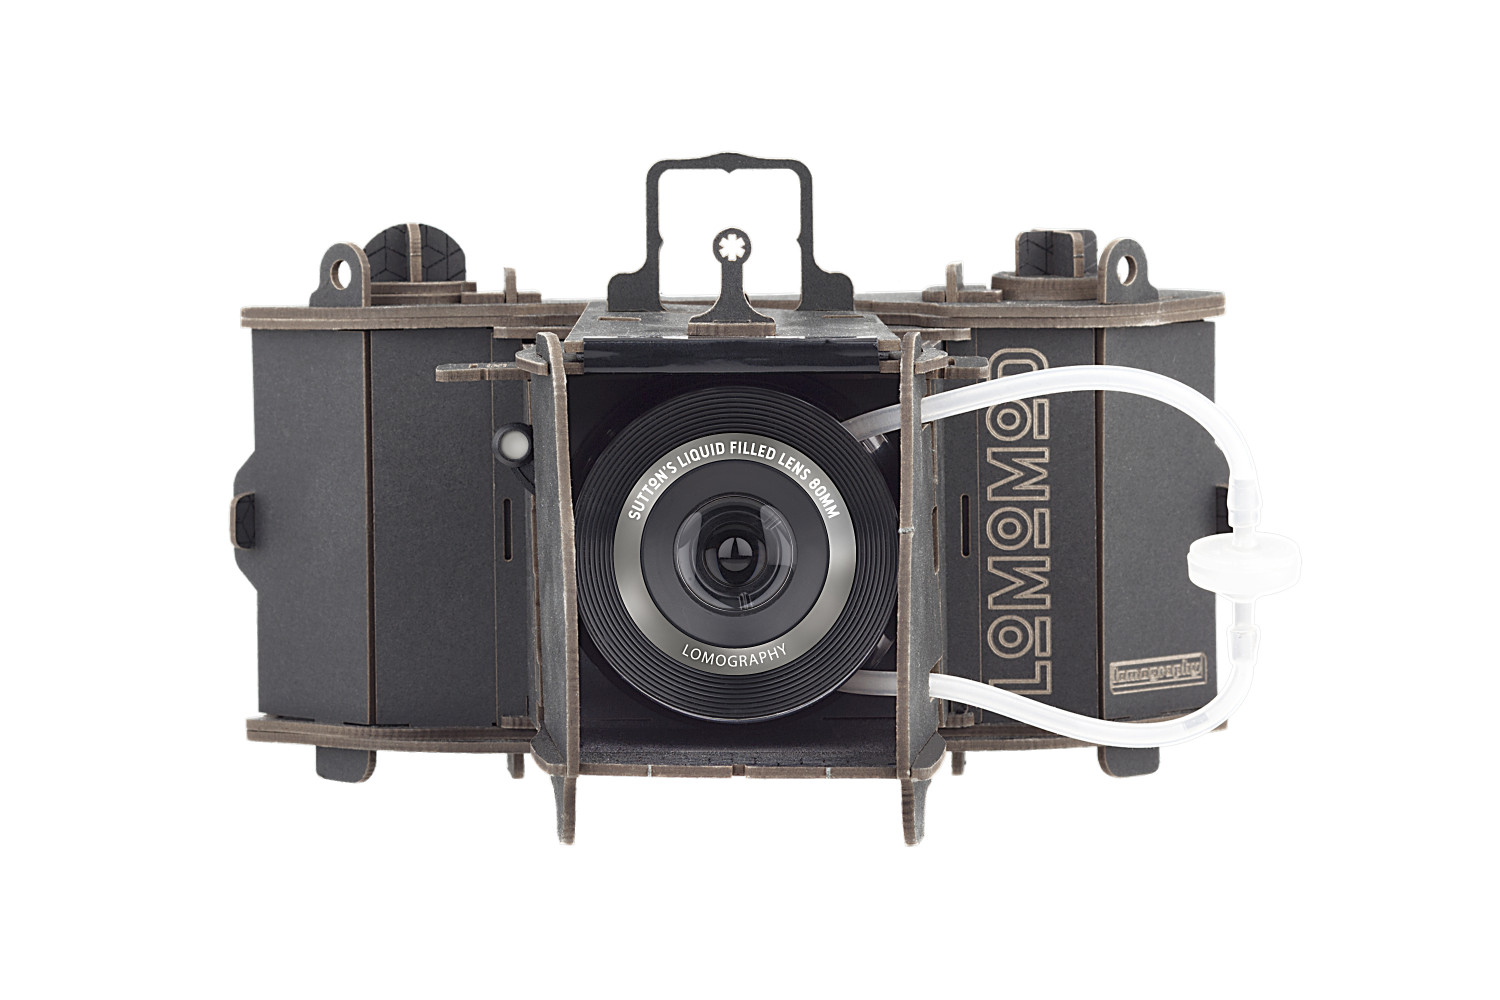 LomoMod No.1 กล้อง DIY สุดเจ๋งบอดี้เป็นกระดาษแข็ง ใช้น้ำแทนเลนส์!